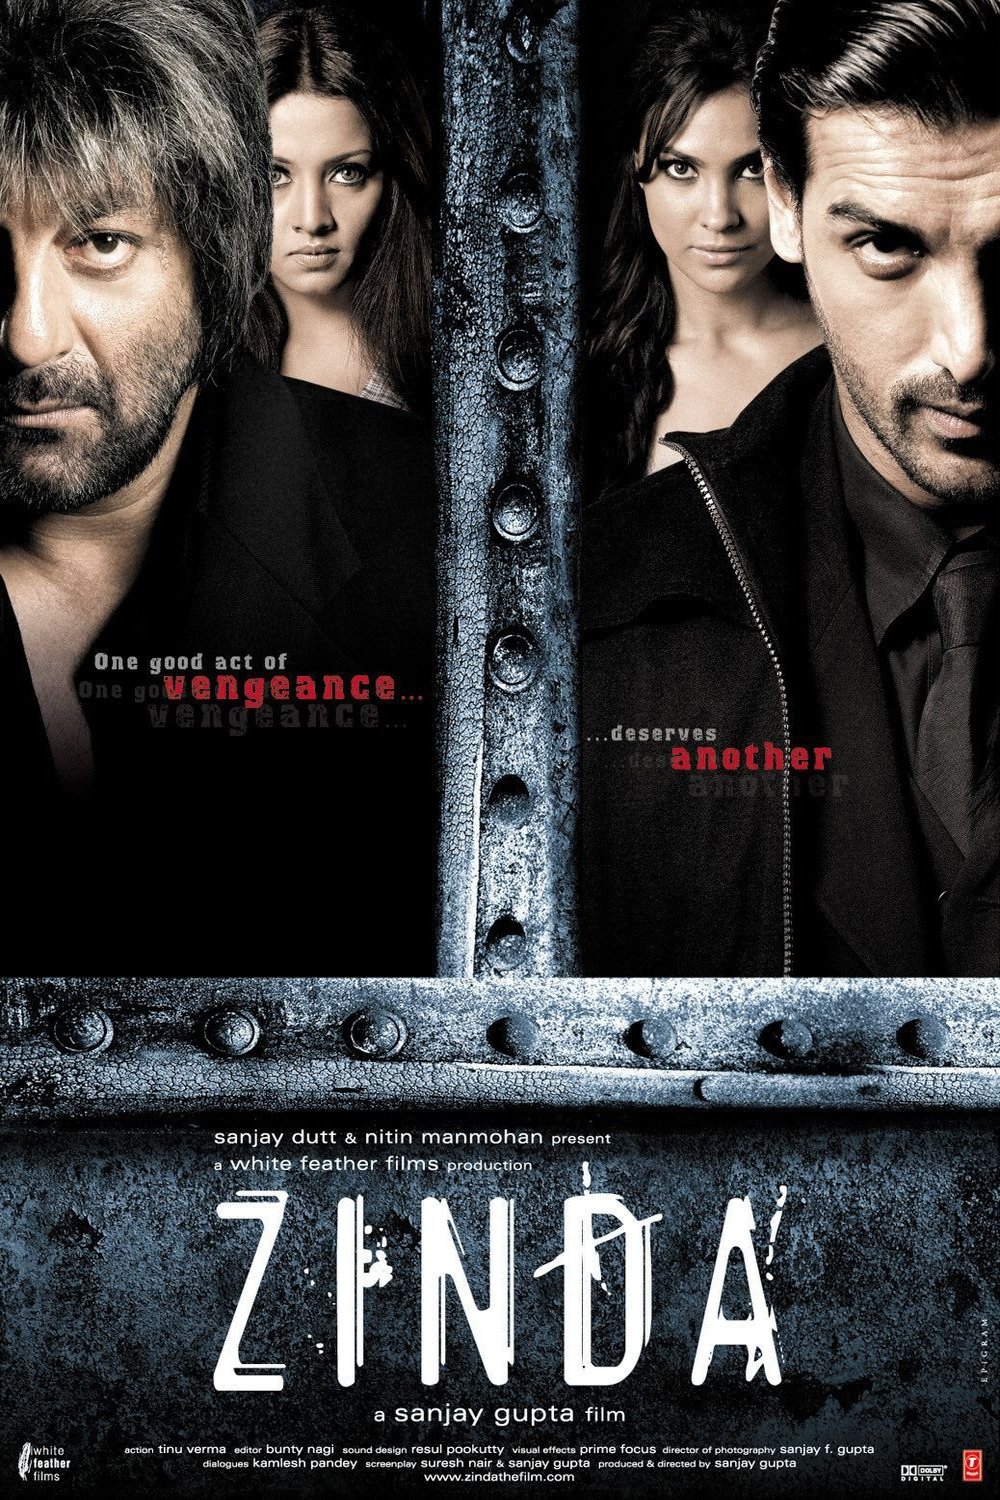 Poster of the movie Zinda